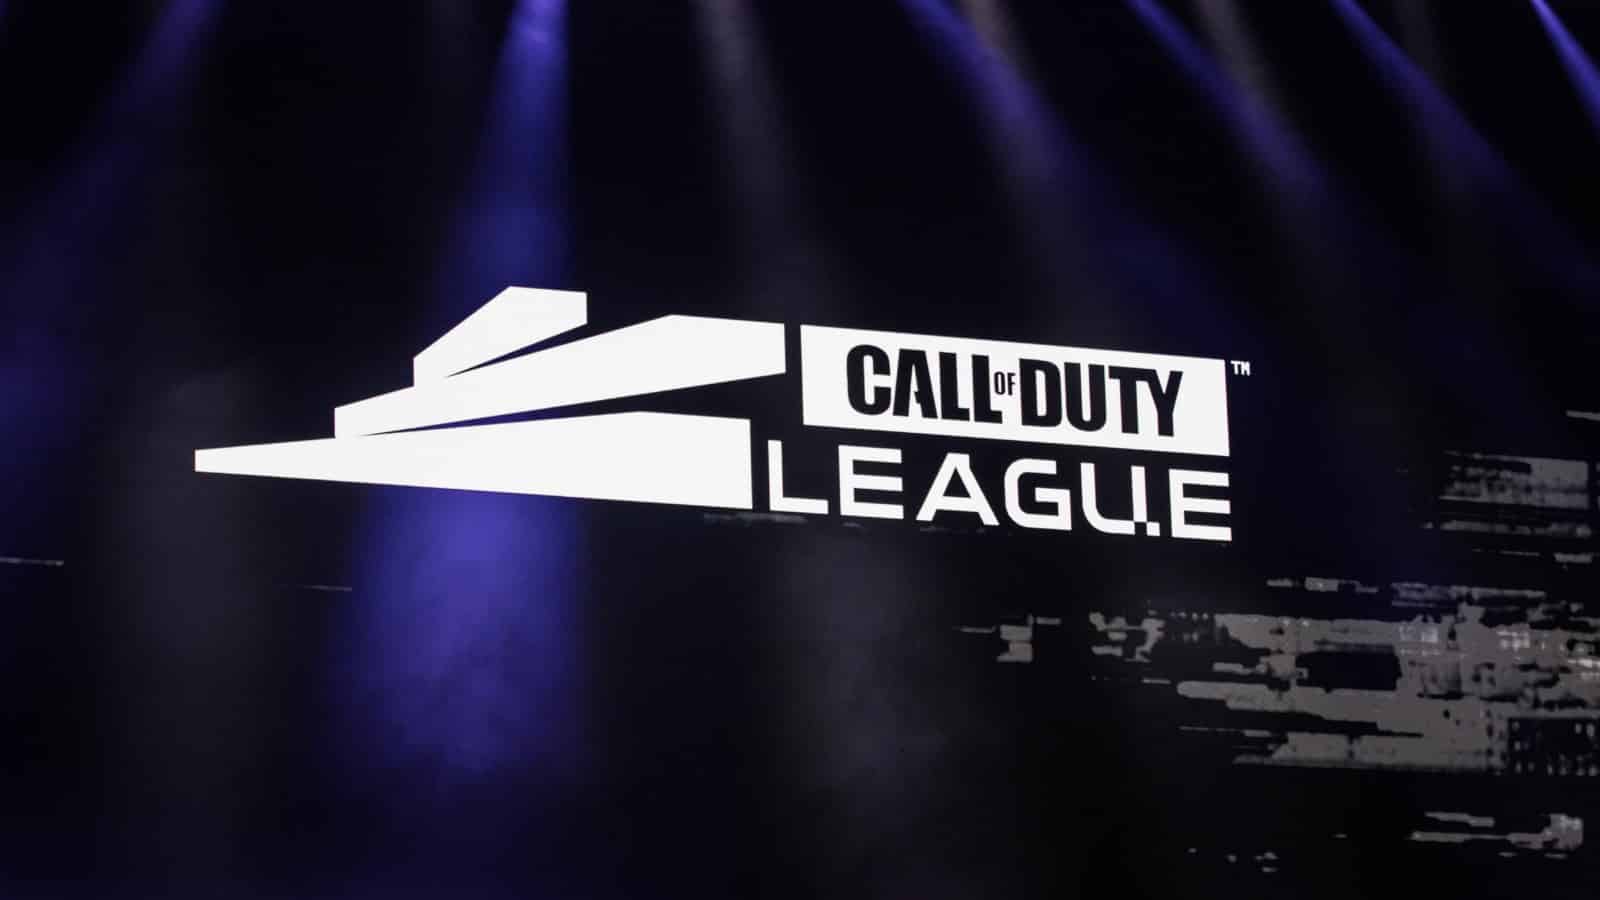 The Call of Duty League logo.